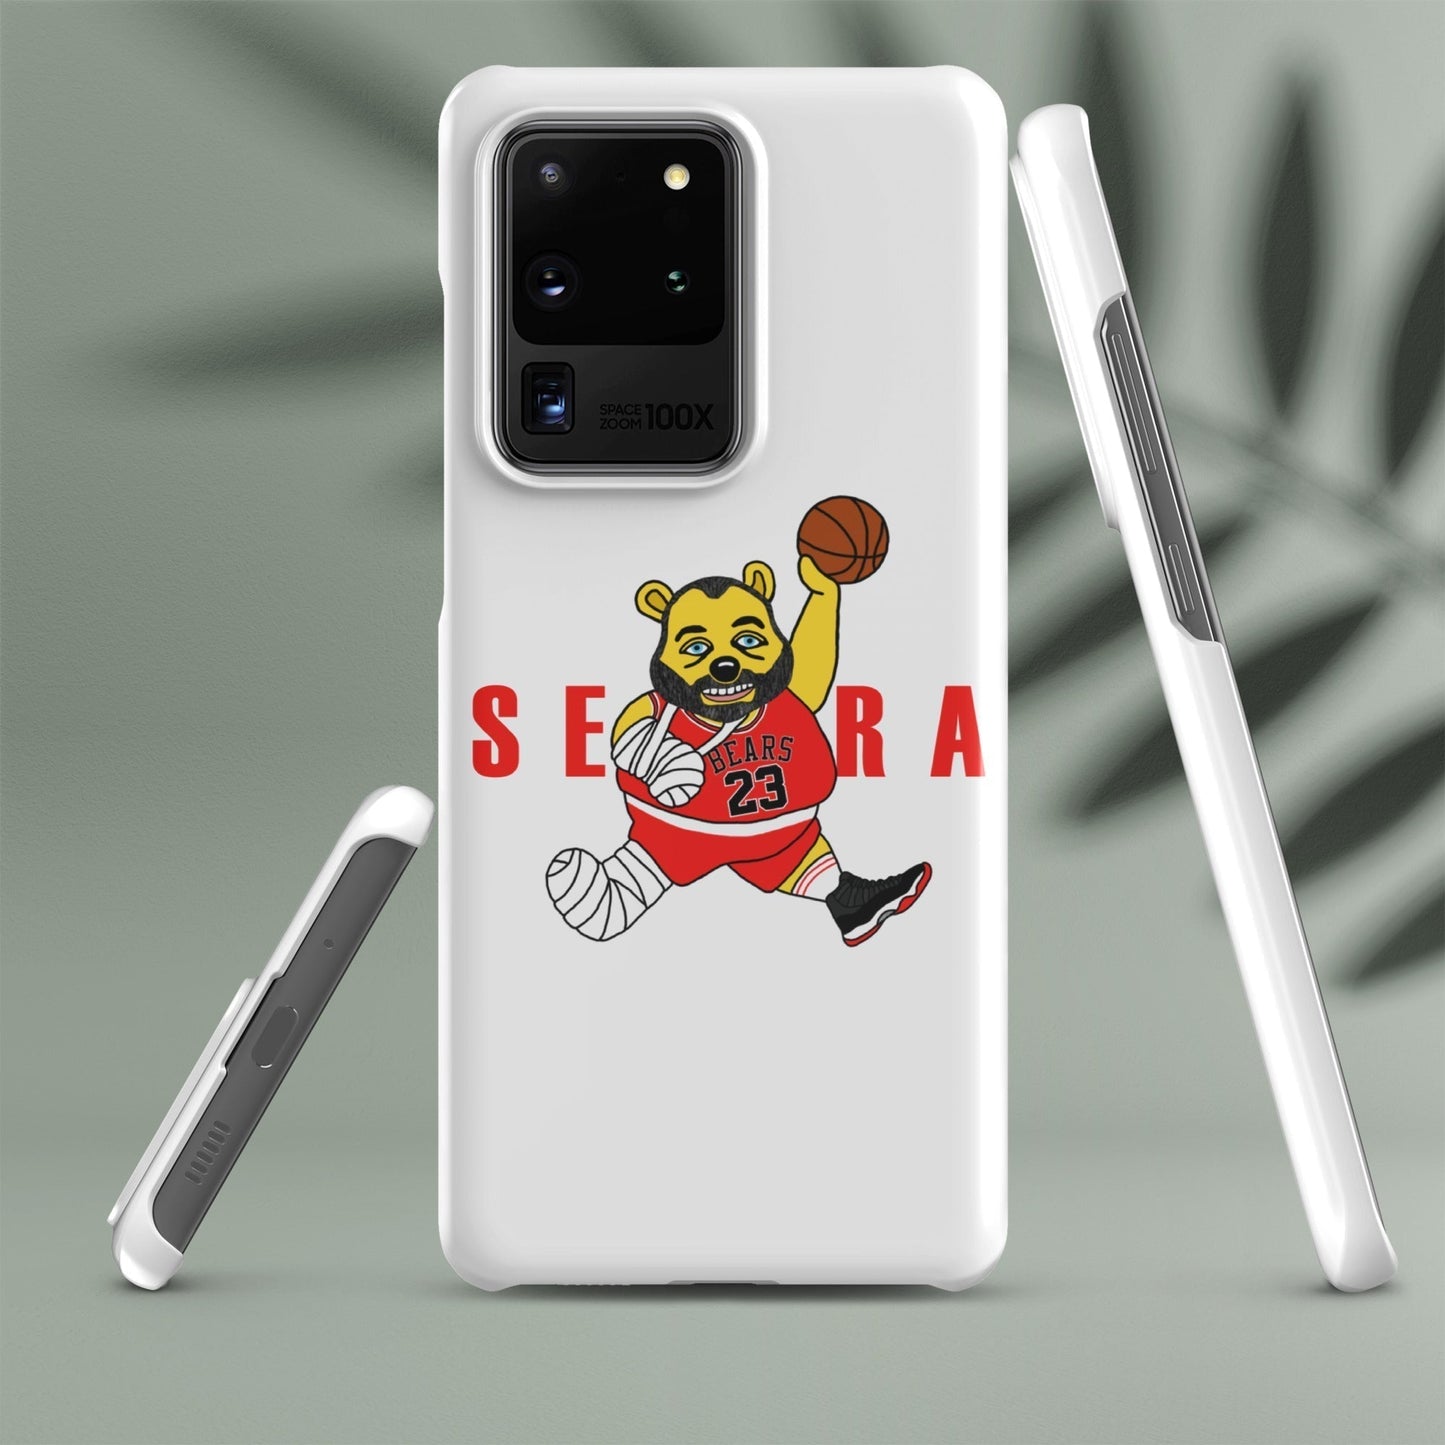 Air Segura, Tom Segura Basketball, Your Mom's House (YMH), 2 Bears 1 Cave, Funny Snap case for Samsung Next Cult Brand 2 Bears 1 Cave, Air Segura, Podcasts, Stand-up Comedy, Tom Segura, YMH